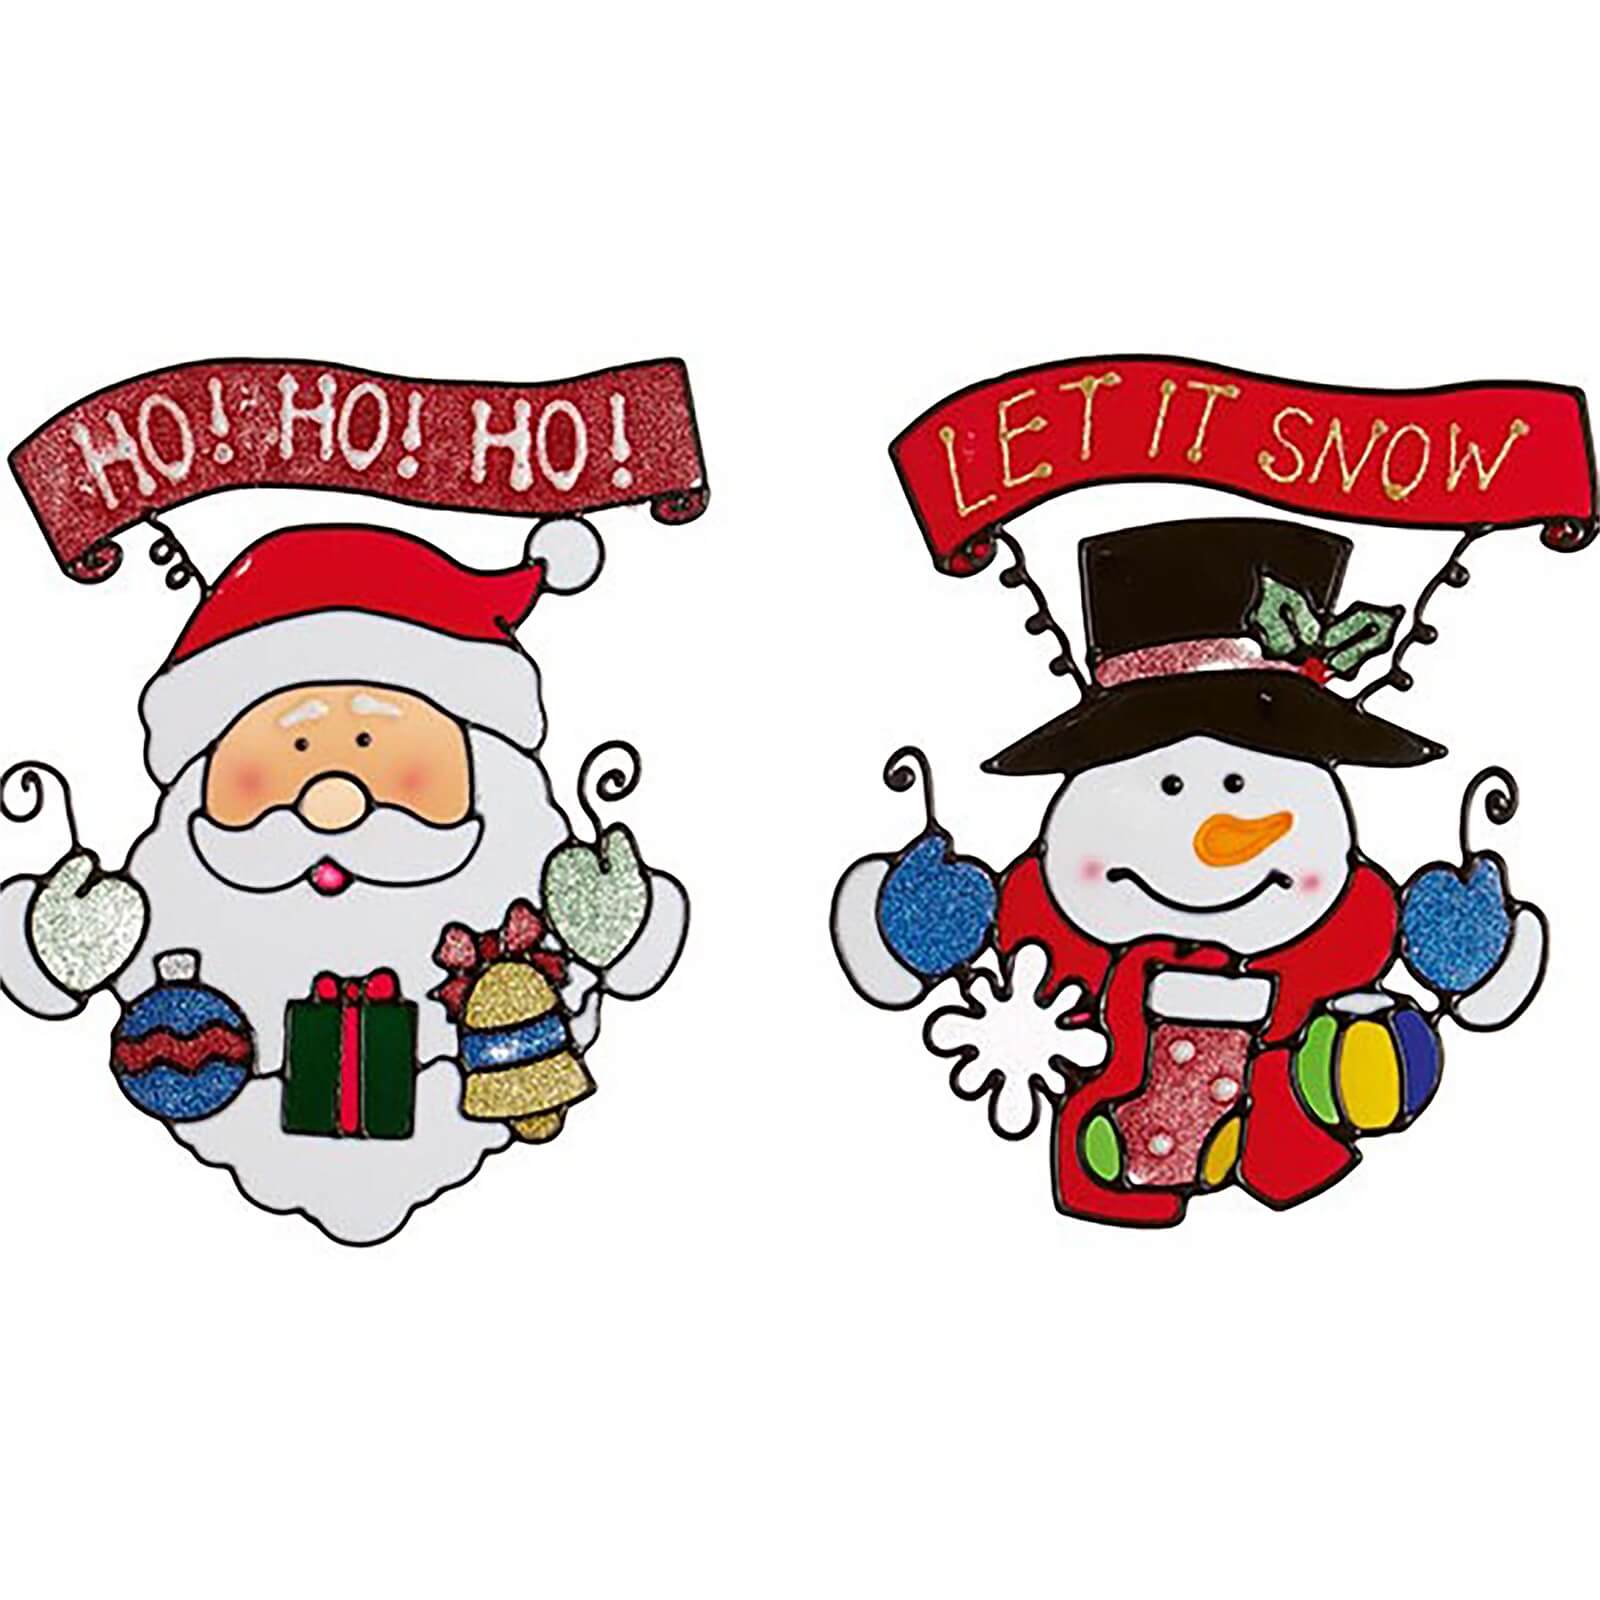 Santa, Snowman & Reindeer Window Cling Christmas Decorations - Assortment